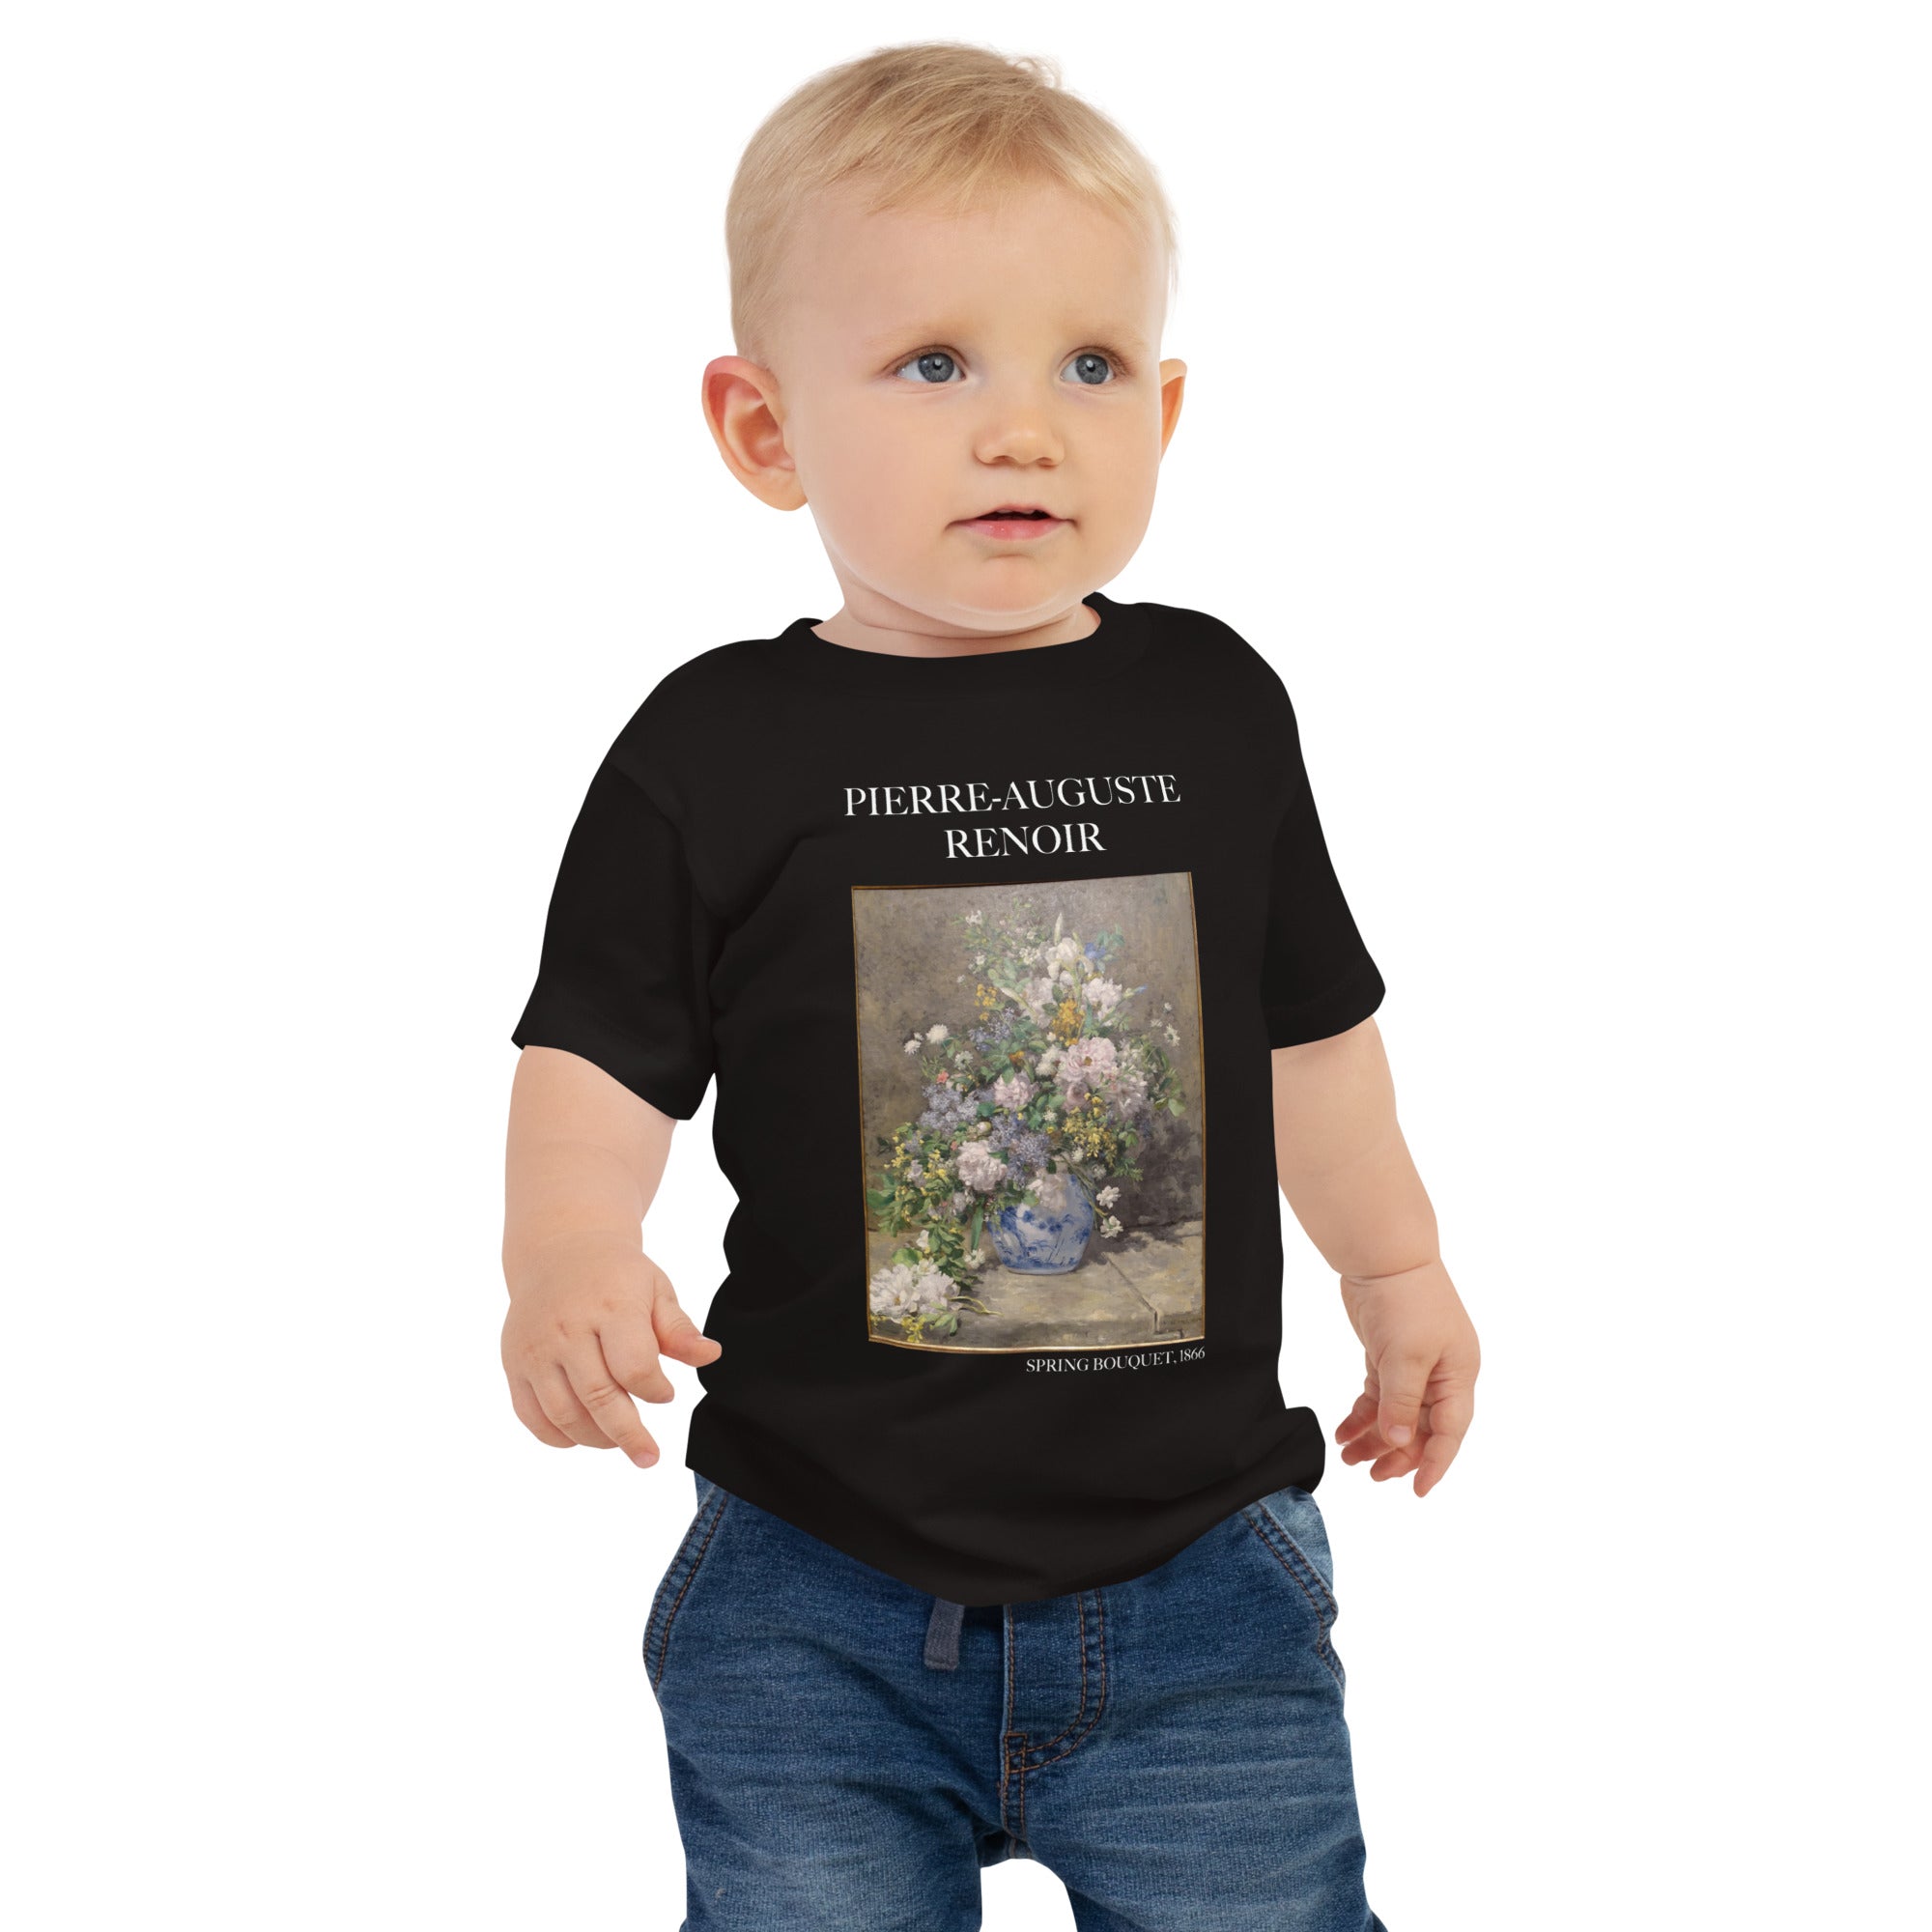 Pierre-Auguste Renoir 'Frühlingsstrauß' Berühmtes Gemälde Baby Basic T-Shirt | Premium Baby Art T-Shirt